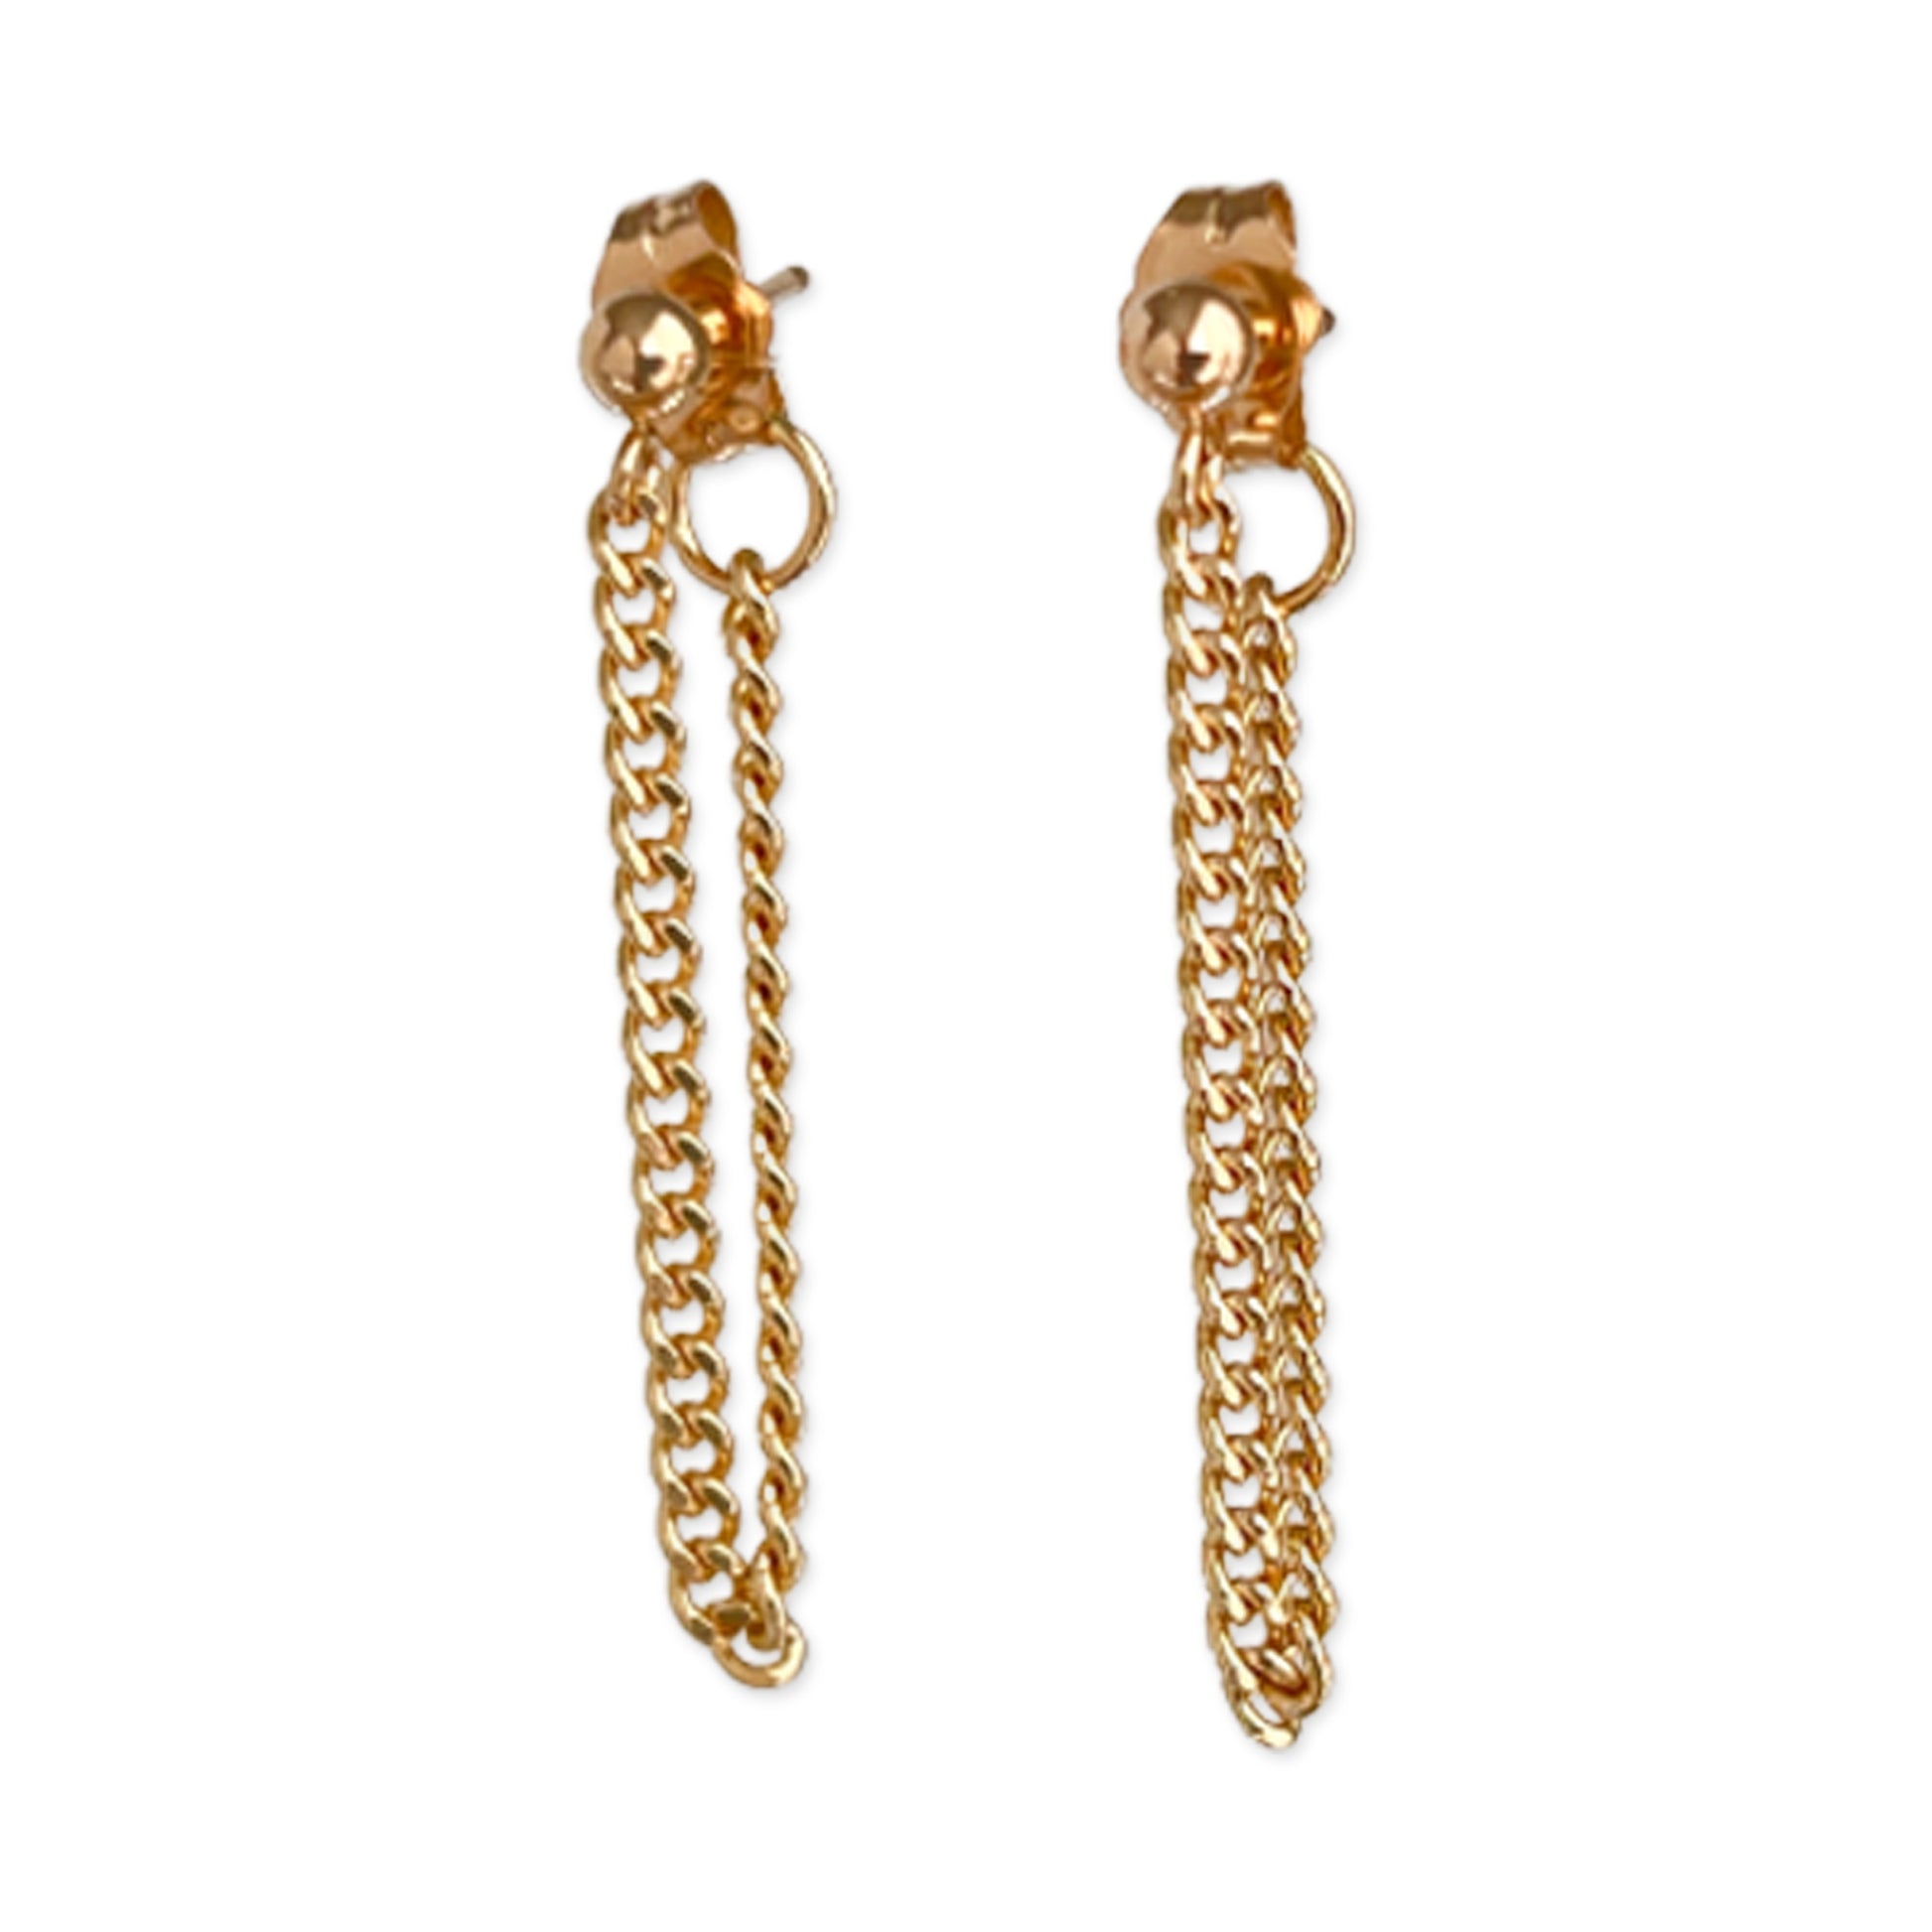 14k gold filled earrings